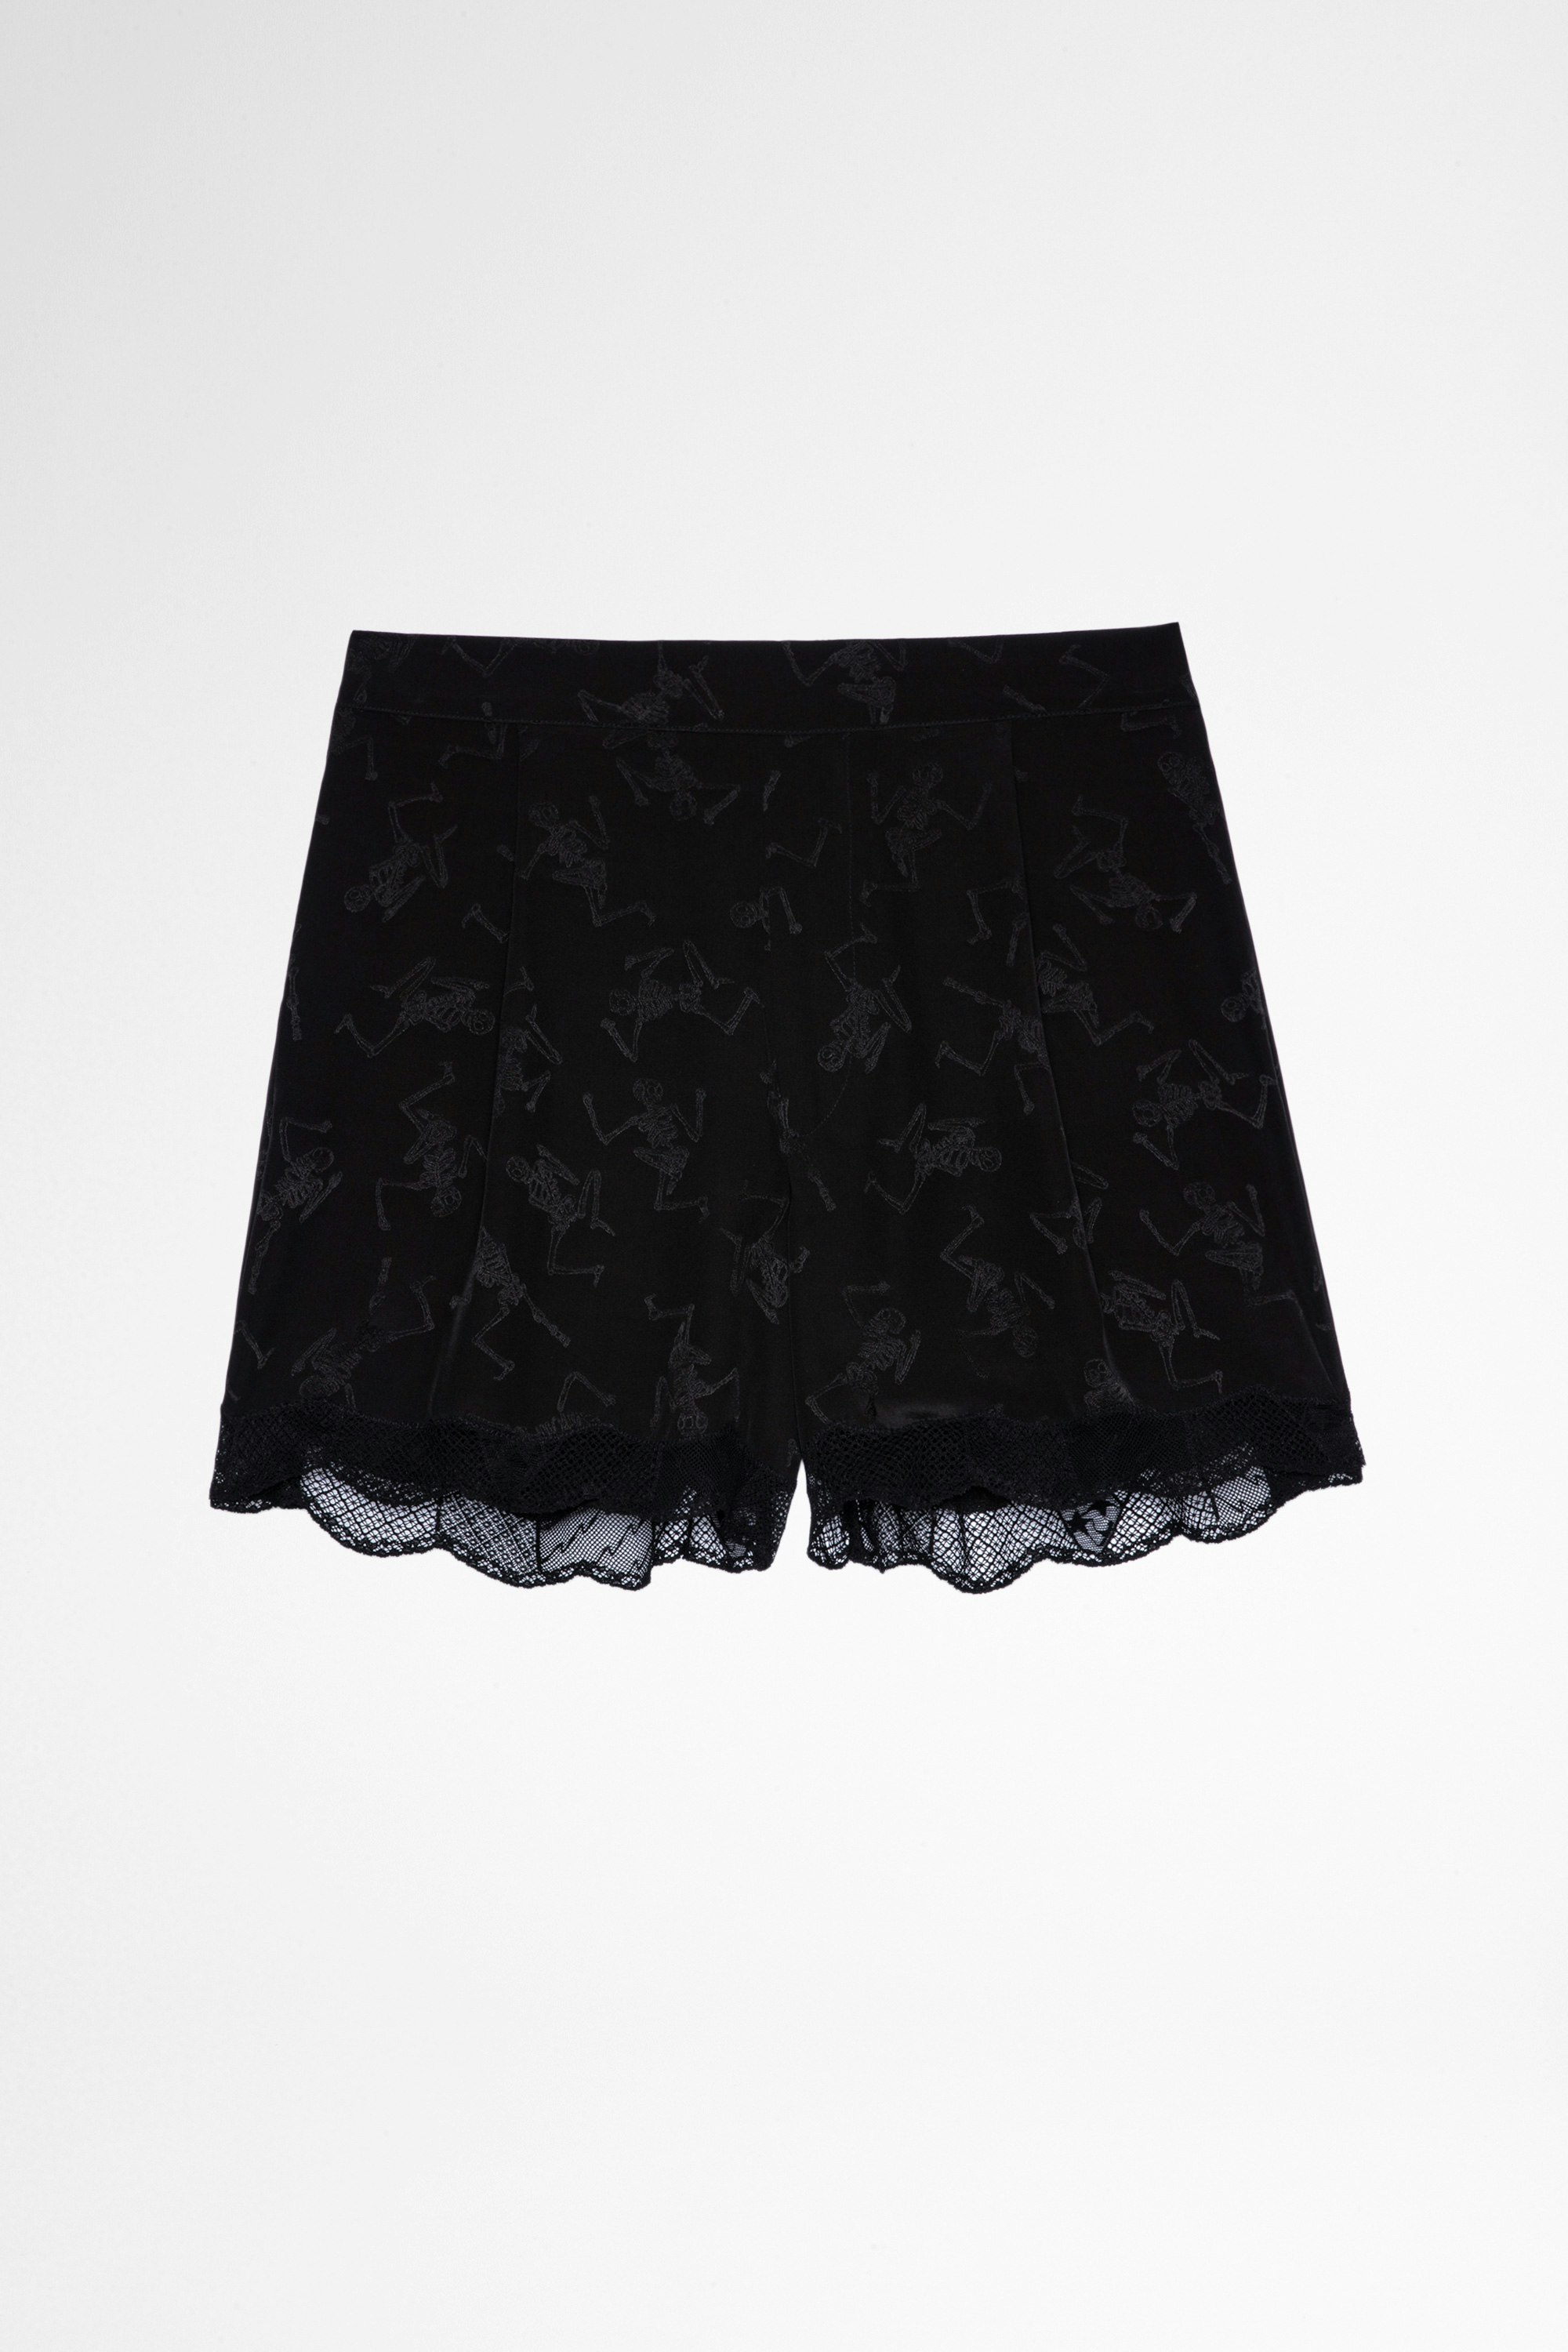 Saturne Squeleton Shorts Silk Women's black silk shorts with jacquard skeletons